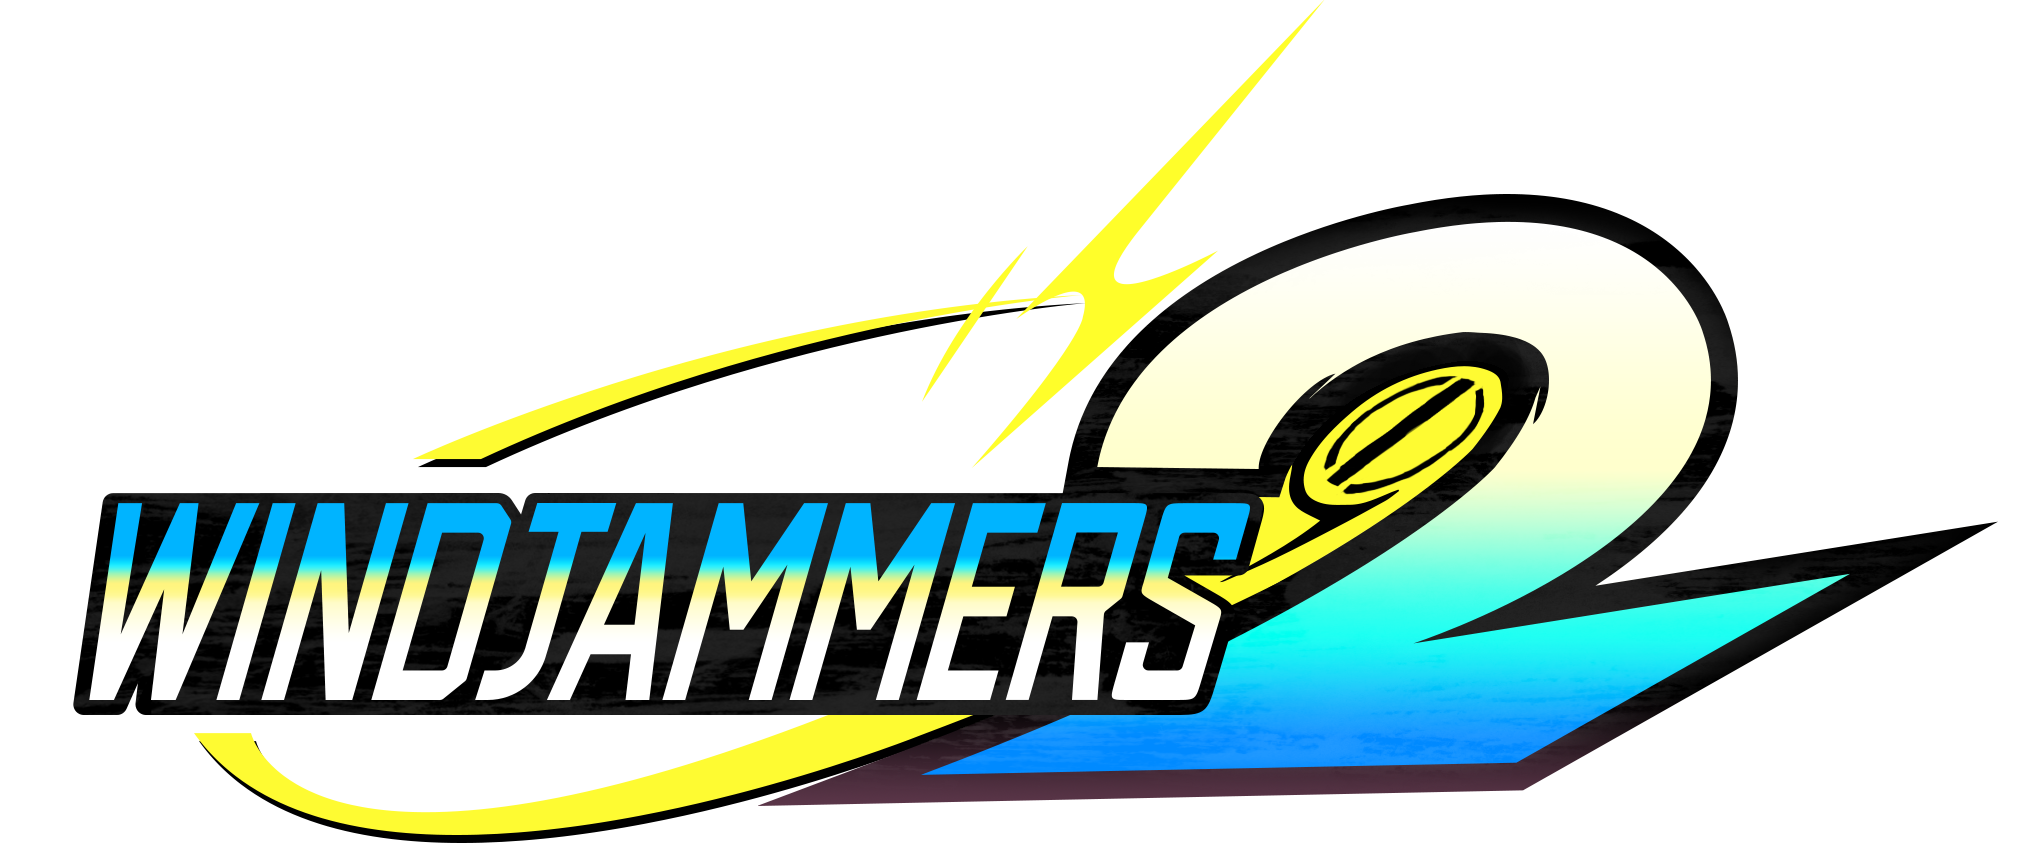 Windjammers 2 - Logo 1 [logo.png]